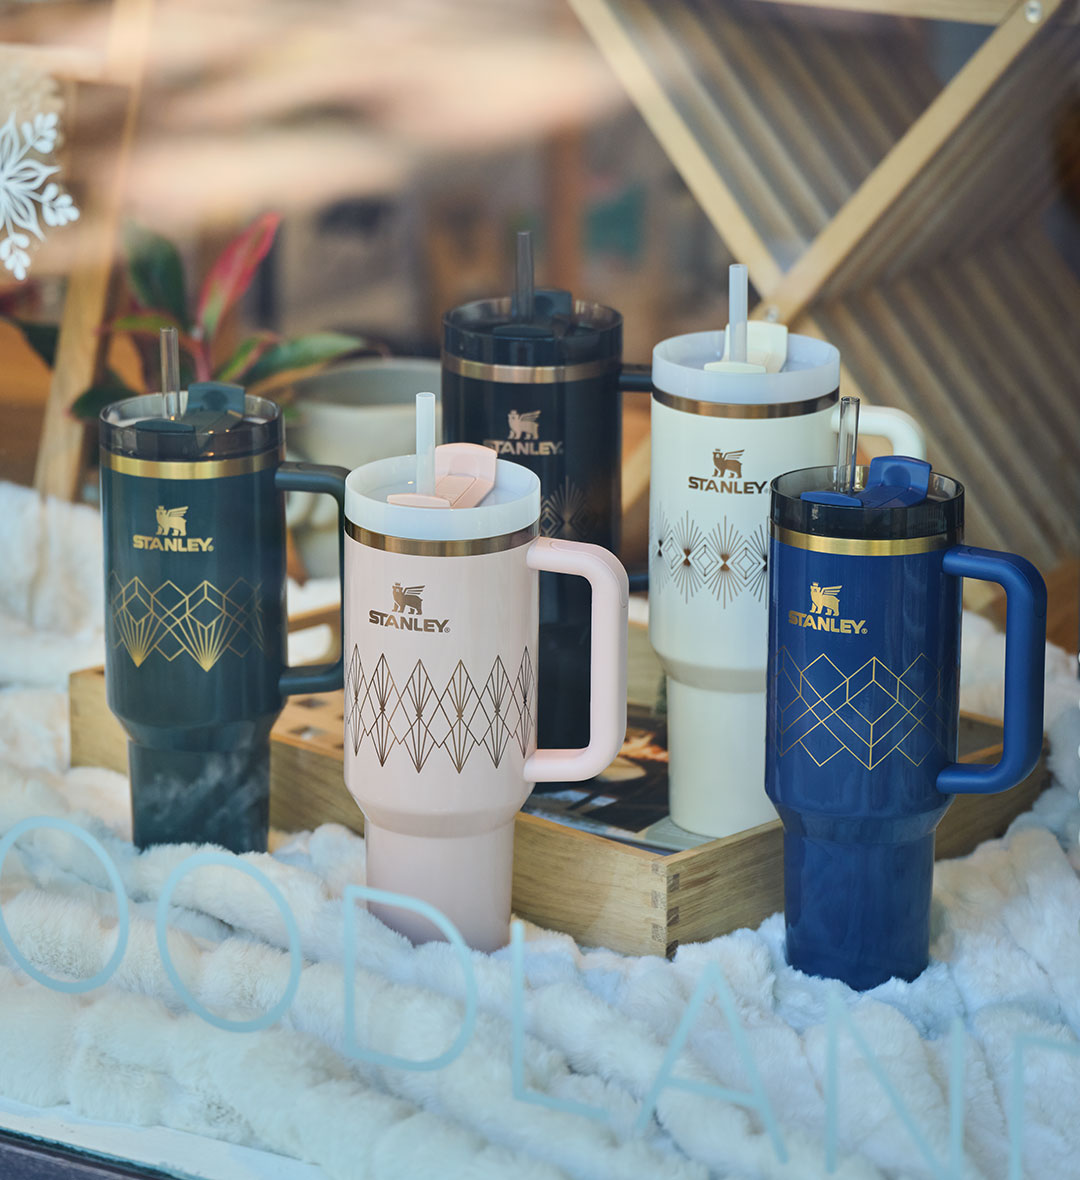 Holiday Tumbler Gift Set – Avanti Coffee Company